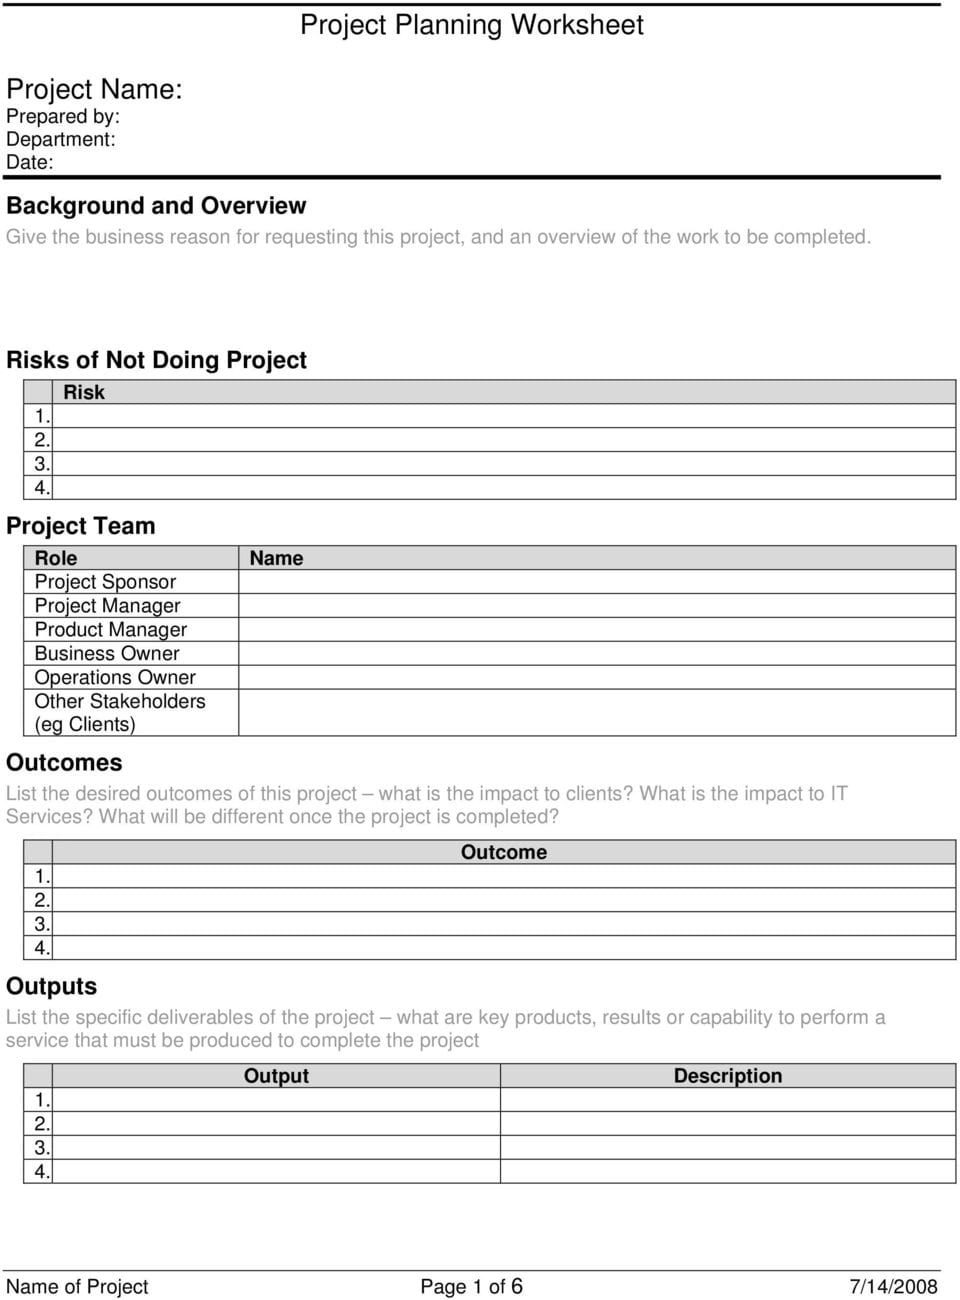 hr-project-planning-worksheet-riset